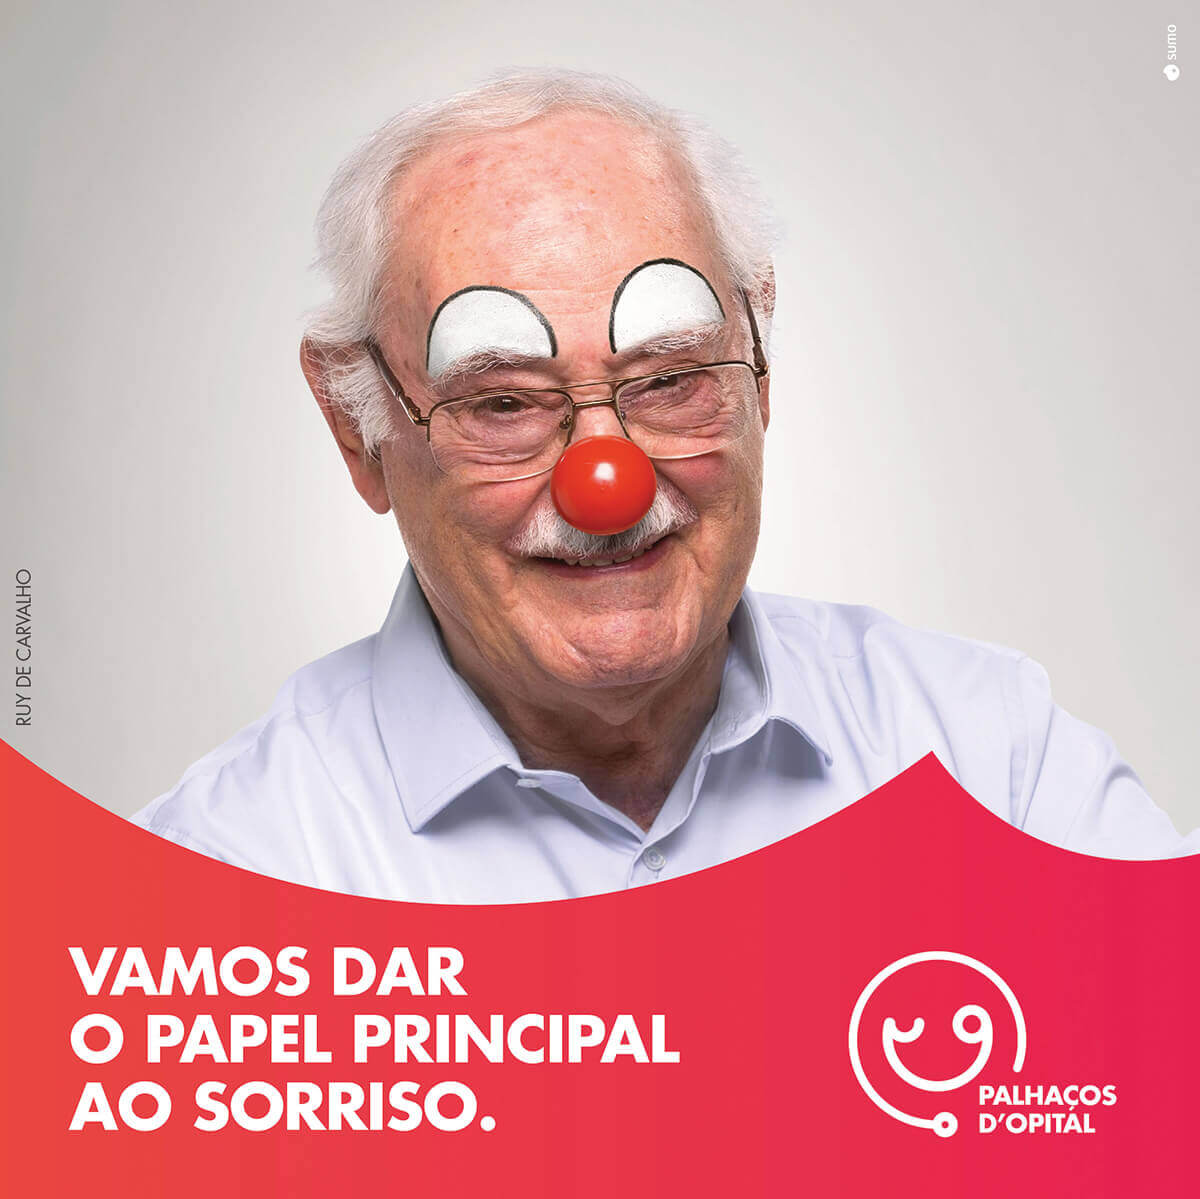 revista amar - portugal - palhaços d'opital - ruy de carvalho